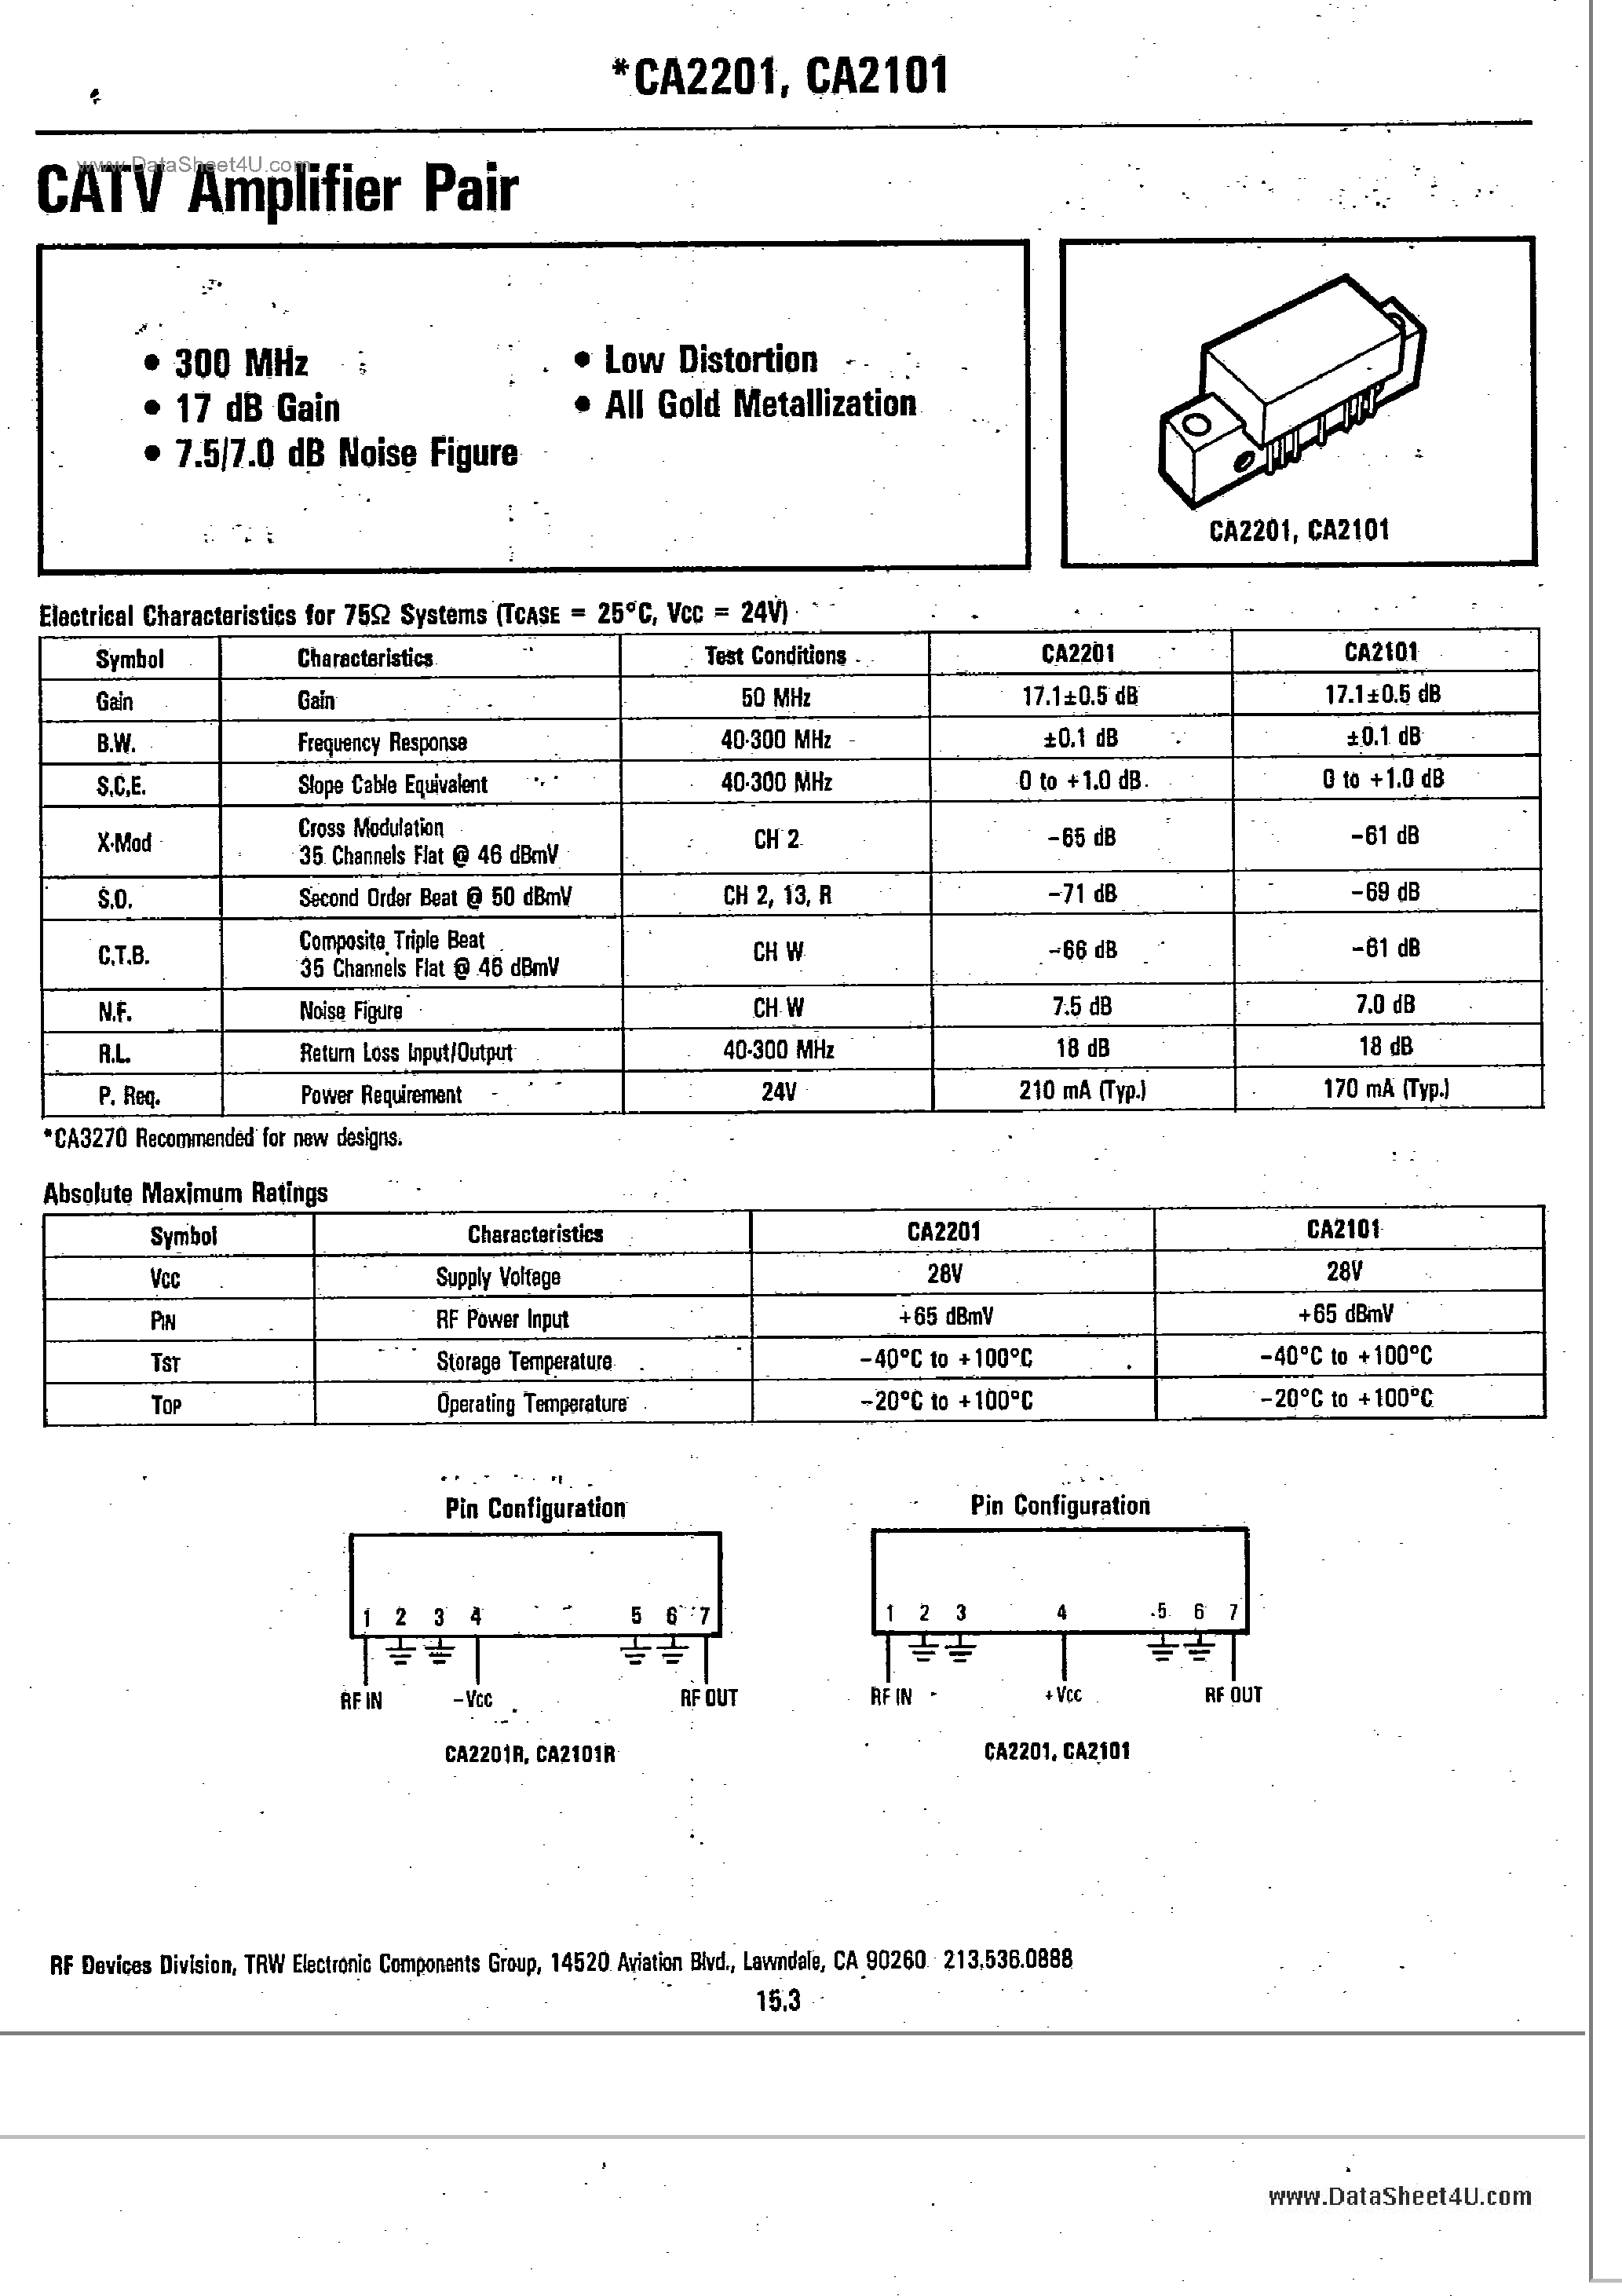 Даташит CA2101 - (CA2101 / CA2201) CATV Amplifier Pair страница 1